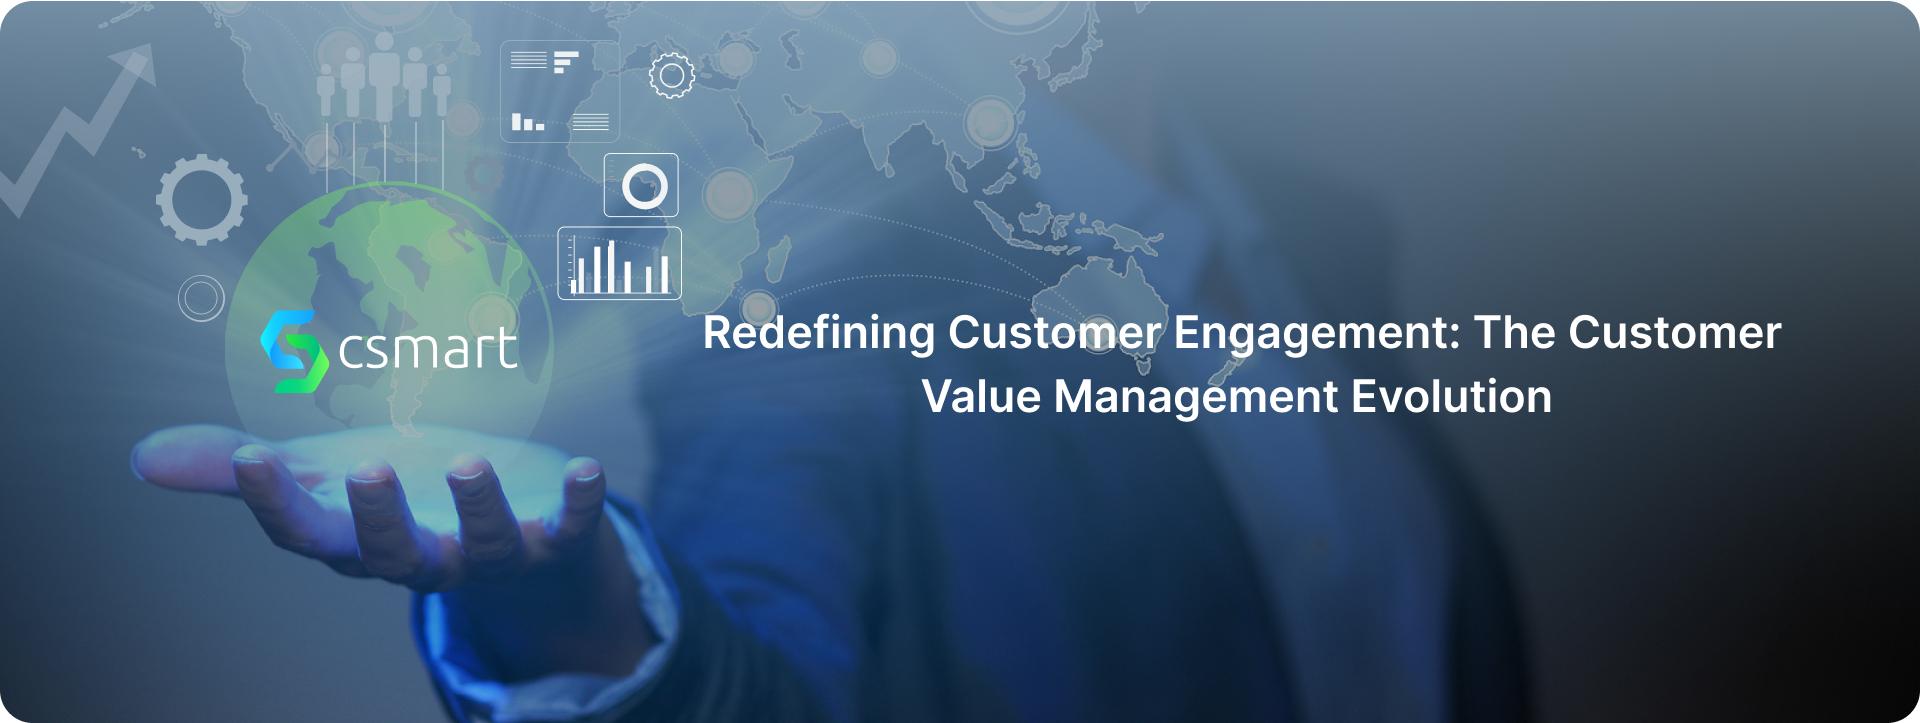 Redefining Customer Engagement: The Customer Value Management Evolution